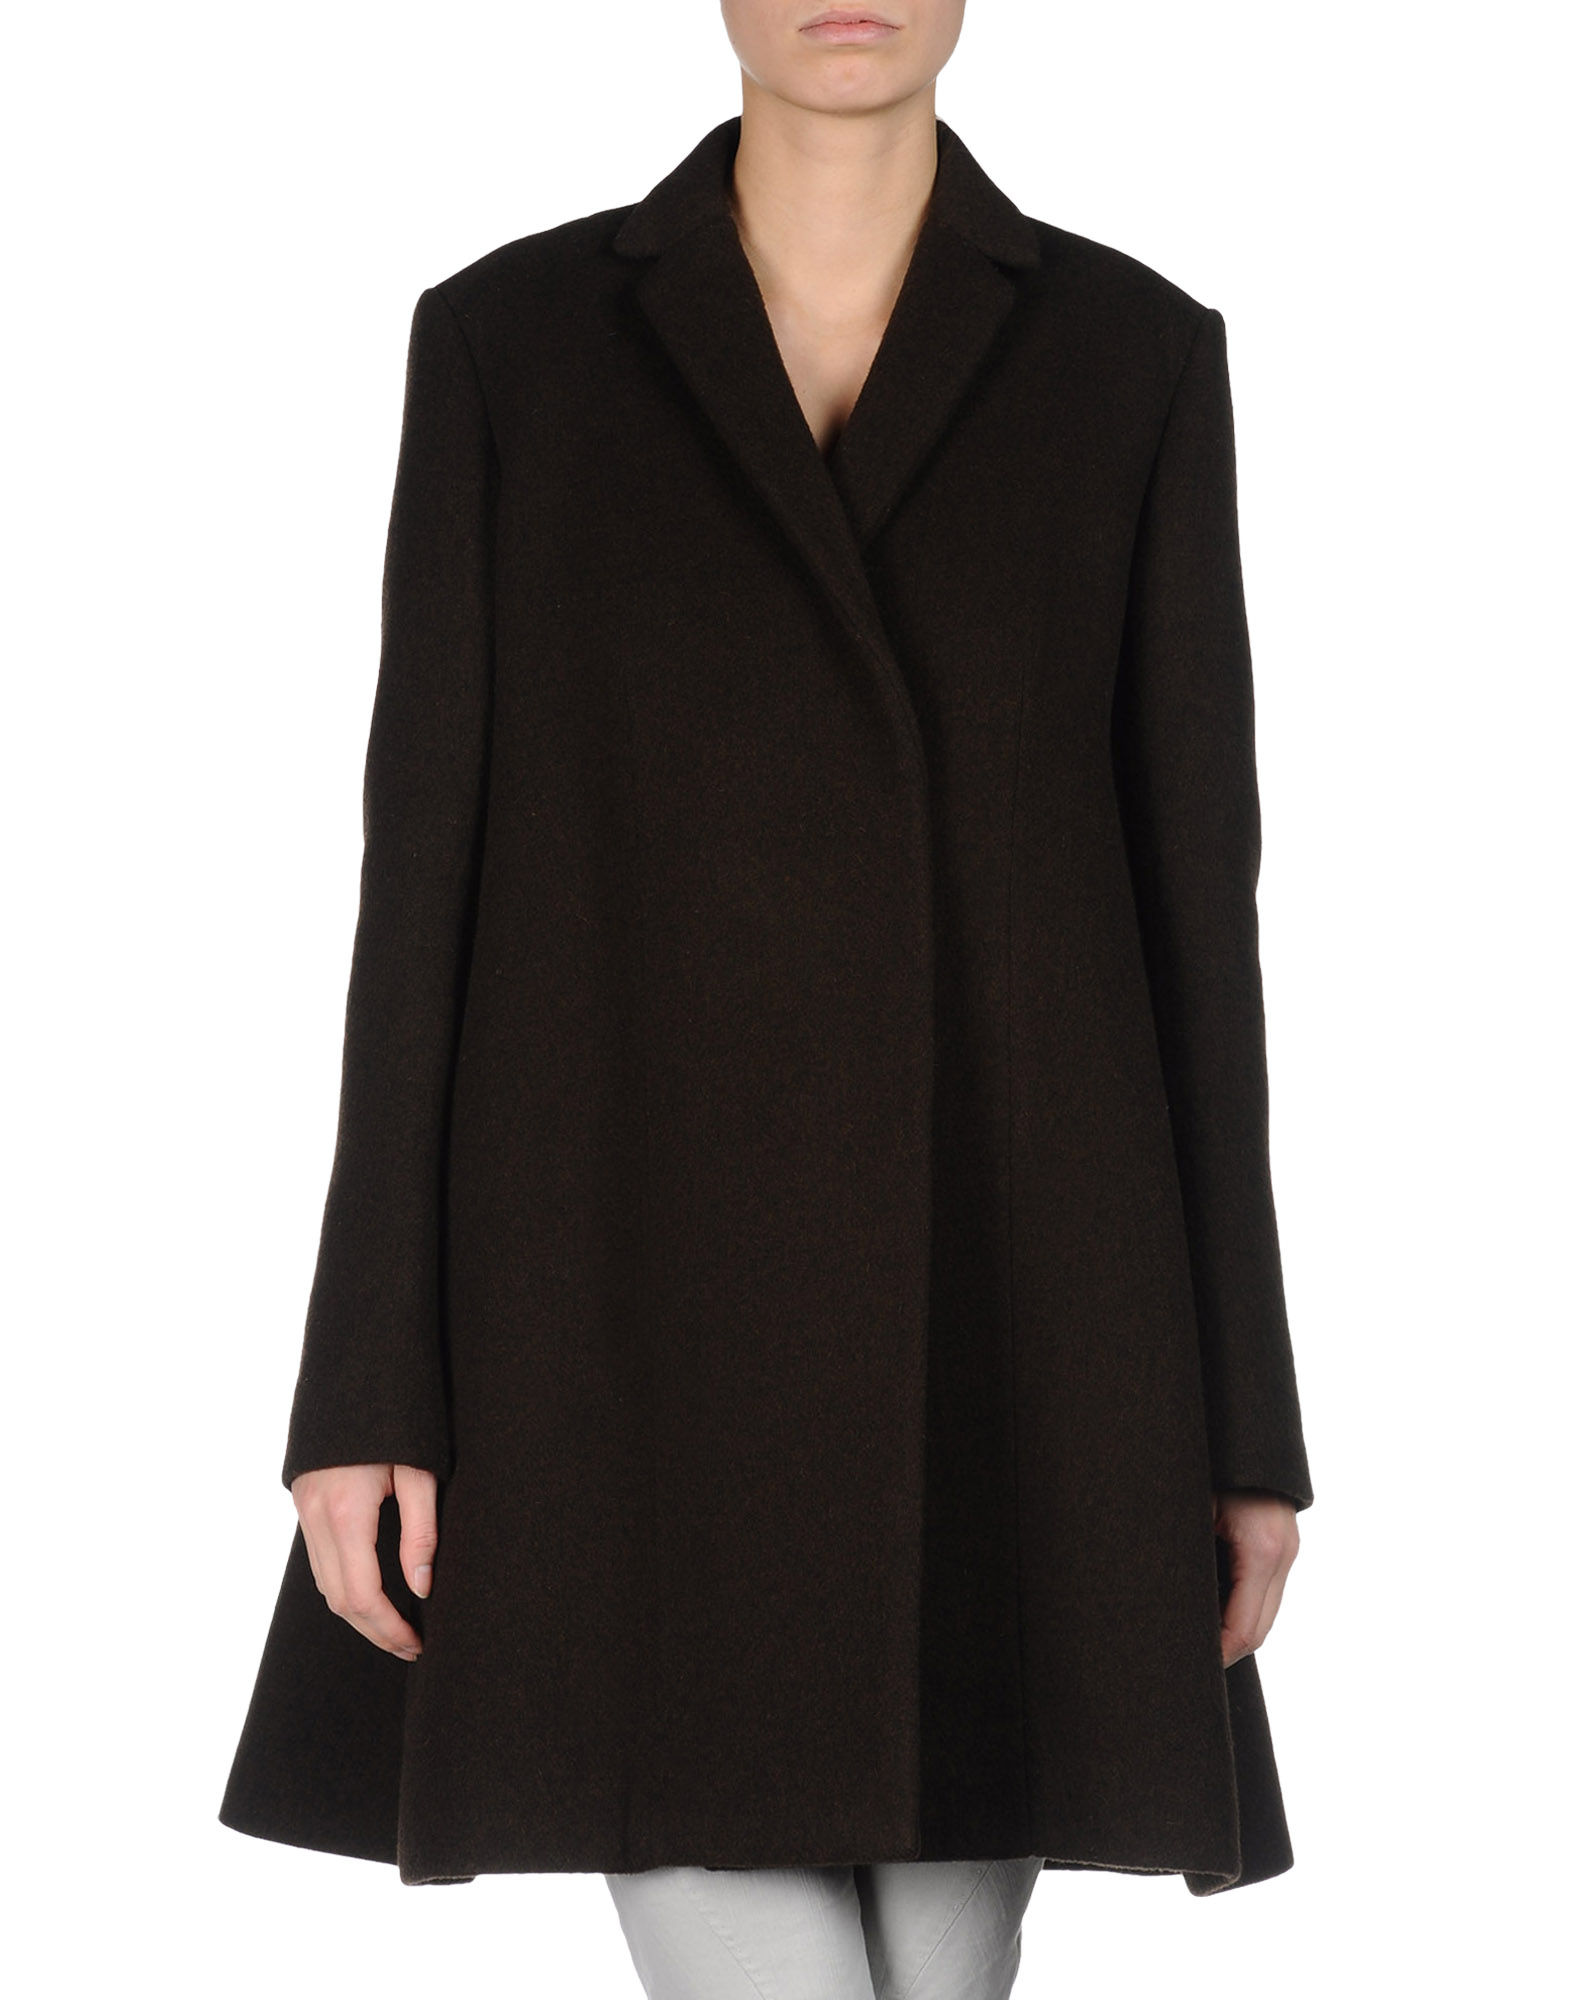 Celine Coat in Brown | Lyst